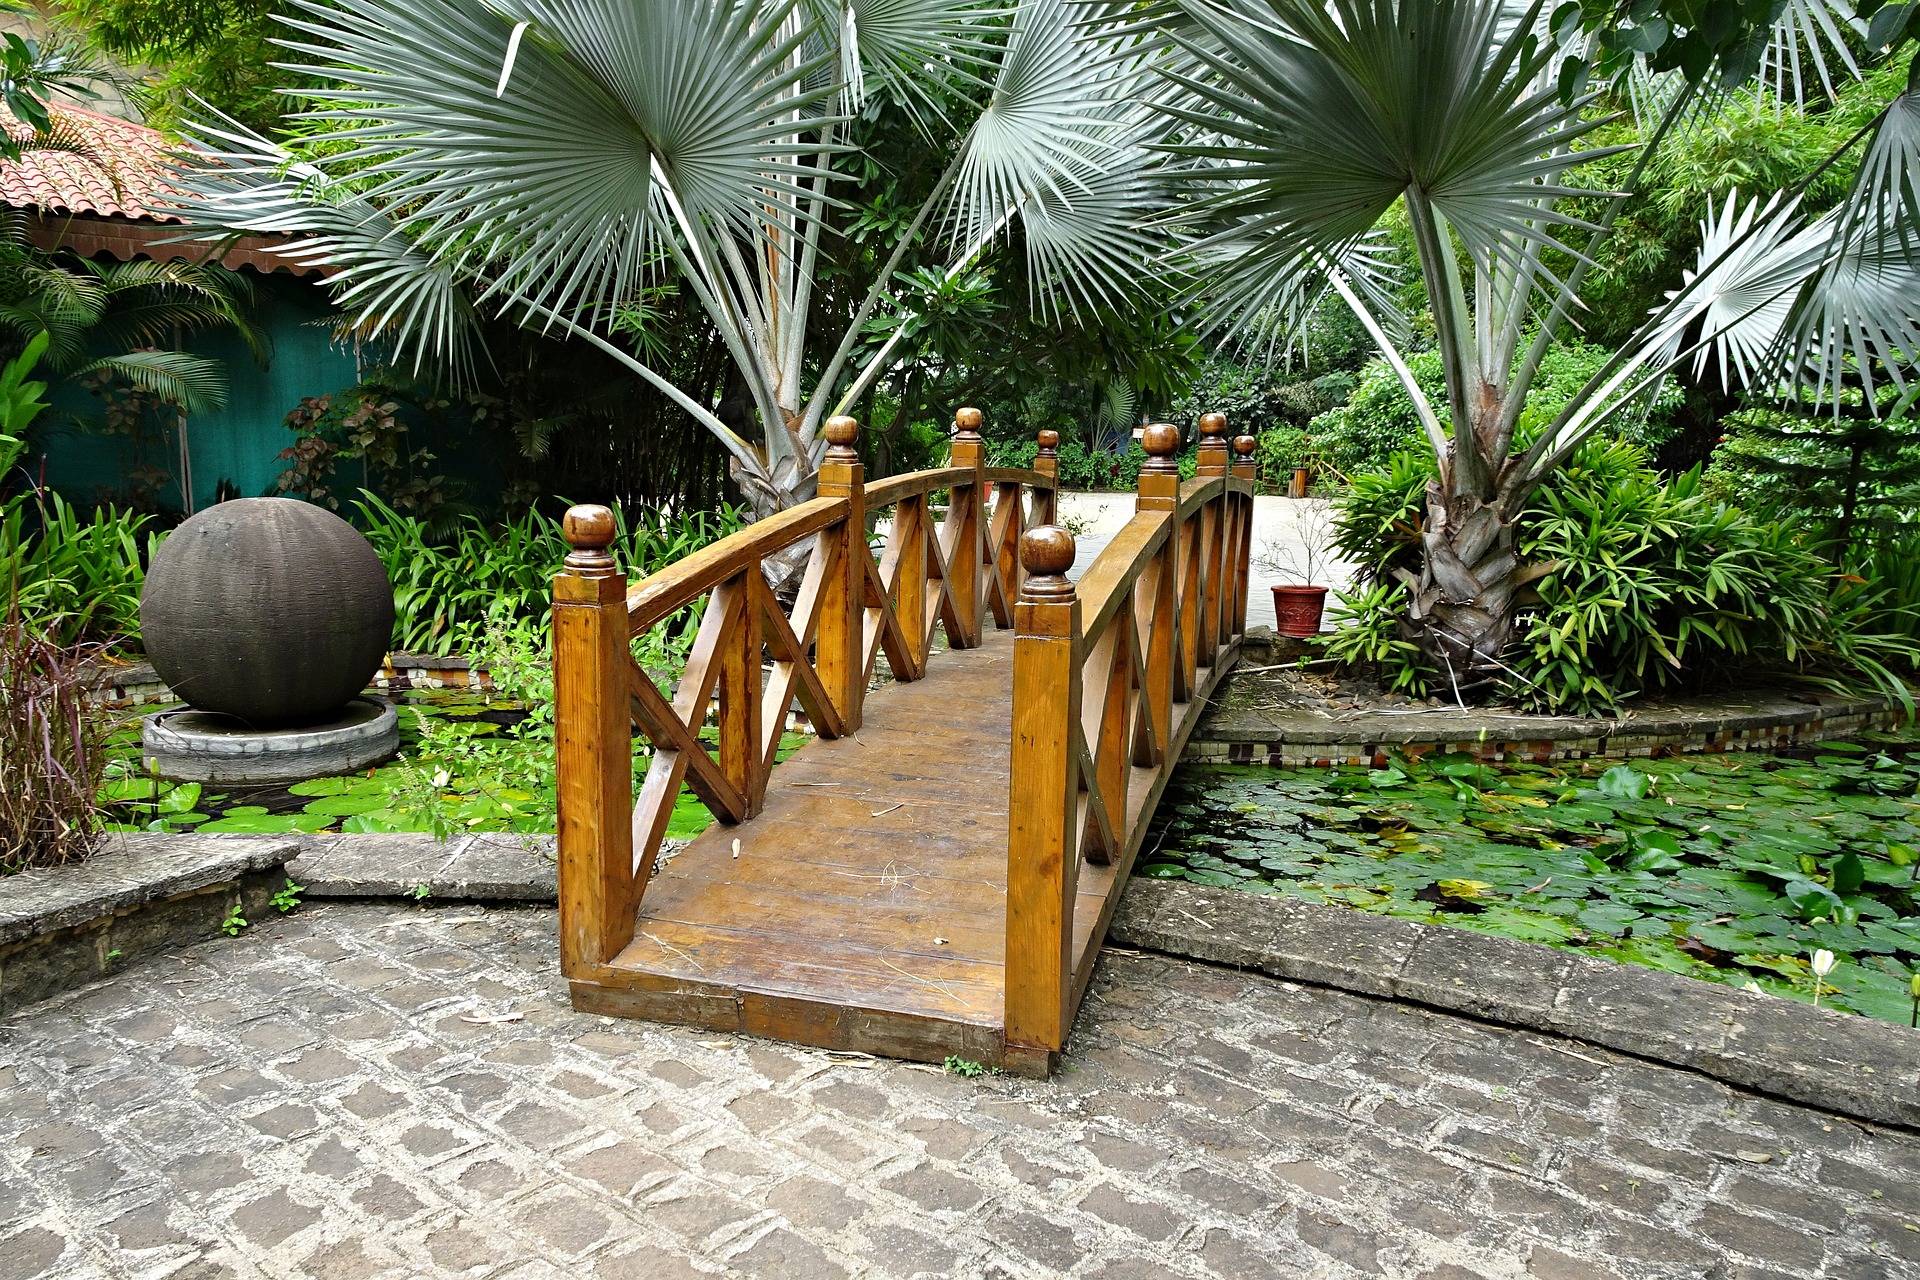 Awesomely Neat Diy Garden Bridge Ideas